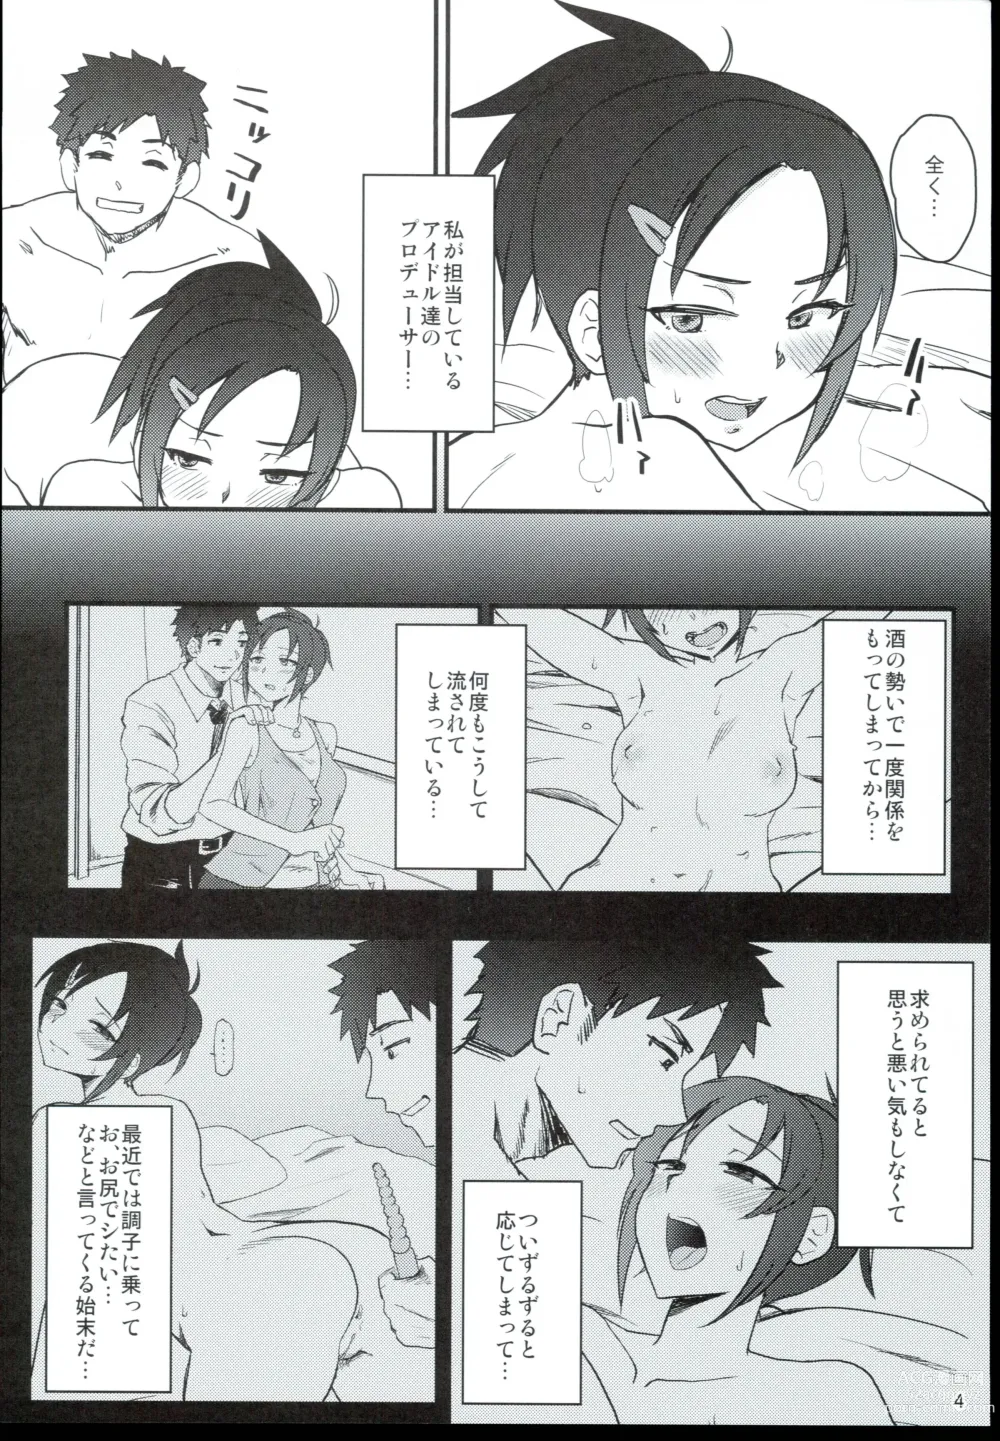 Page 4 of doujinshi JUNK BOOK 2